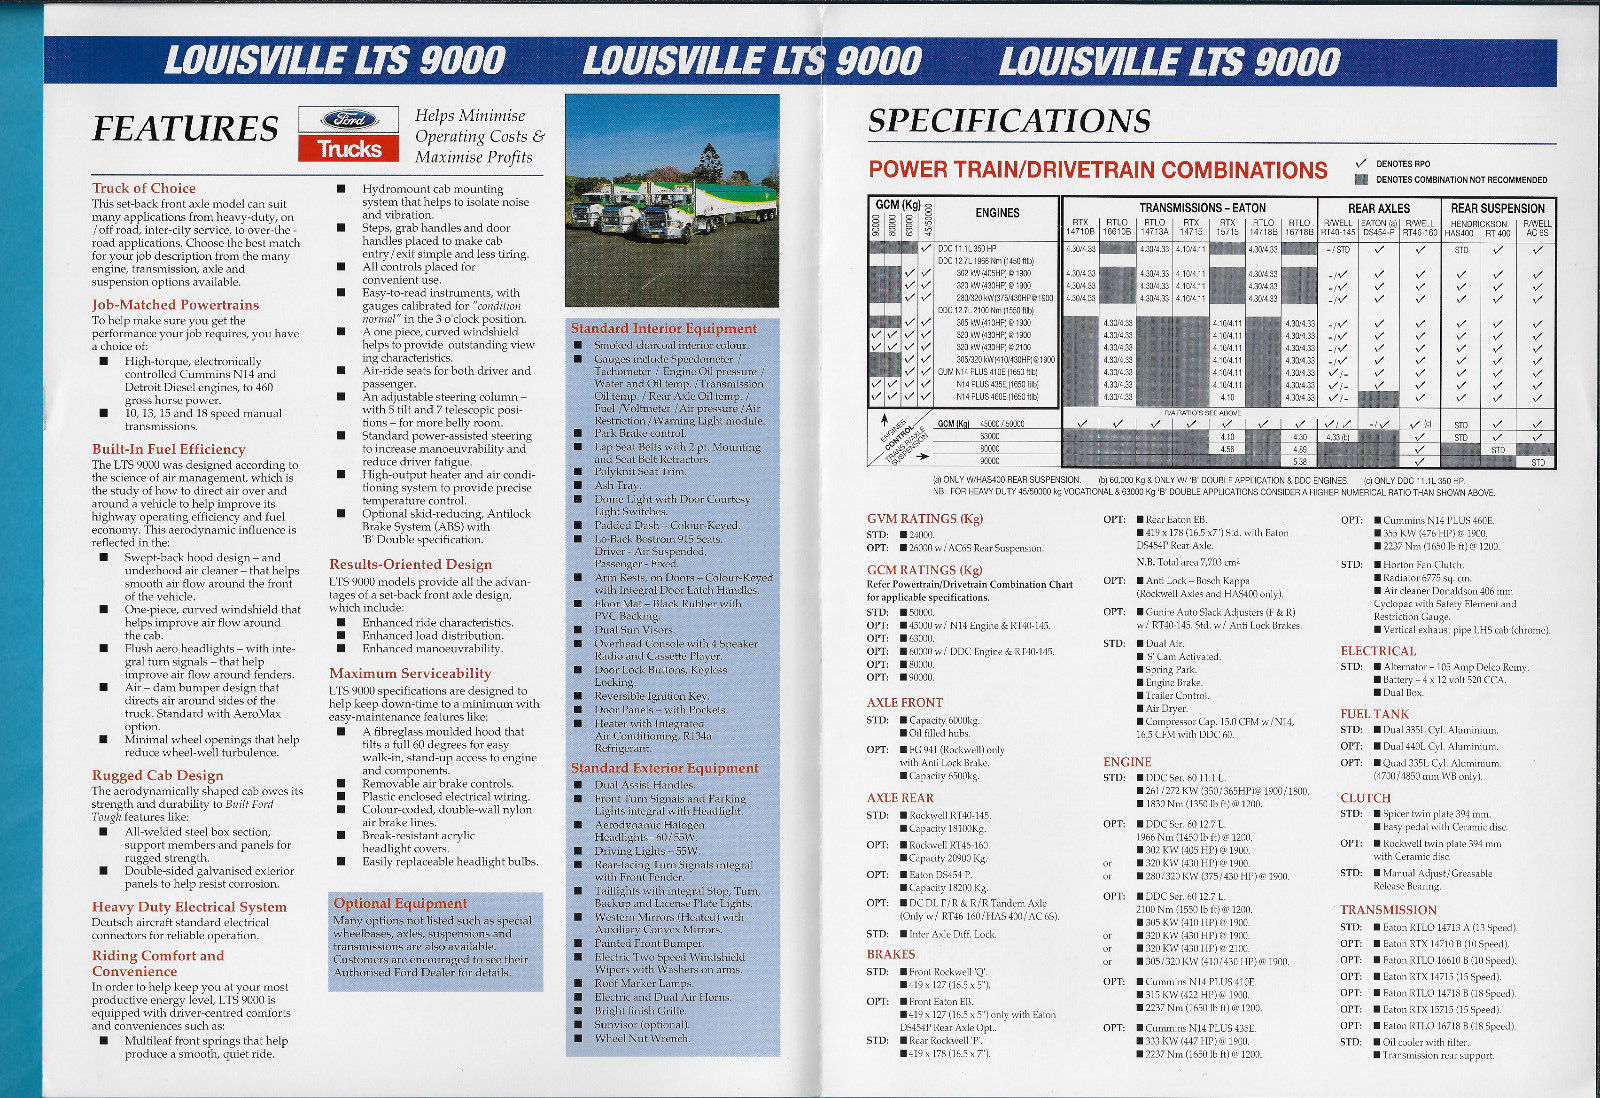 Ford Louisville LTS 9000 (2).jpg-2022-12-7 13.59.49